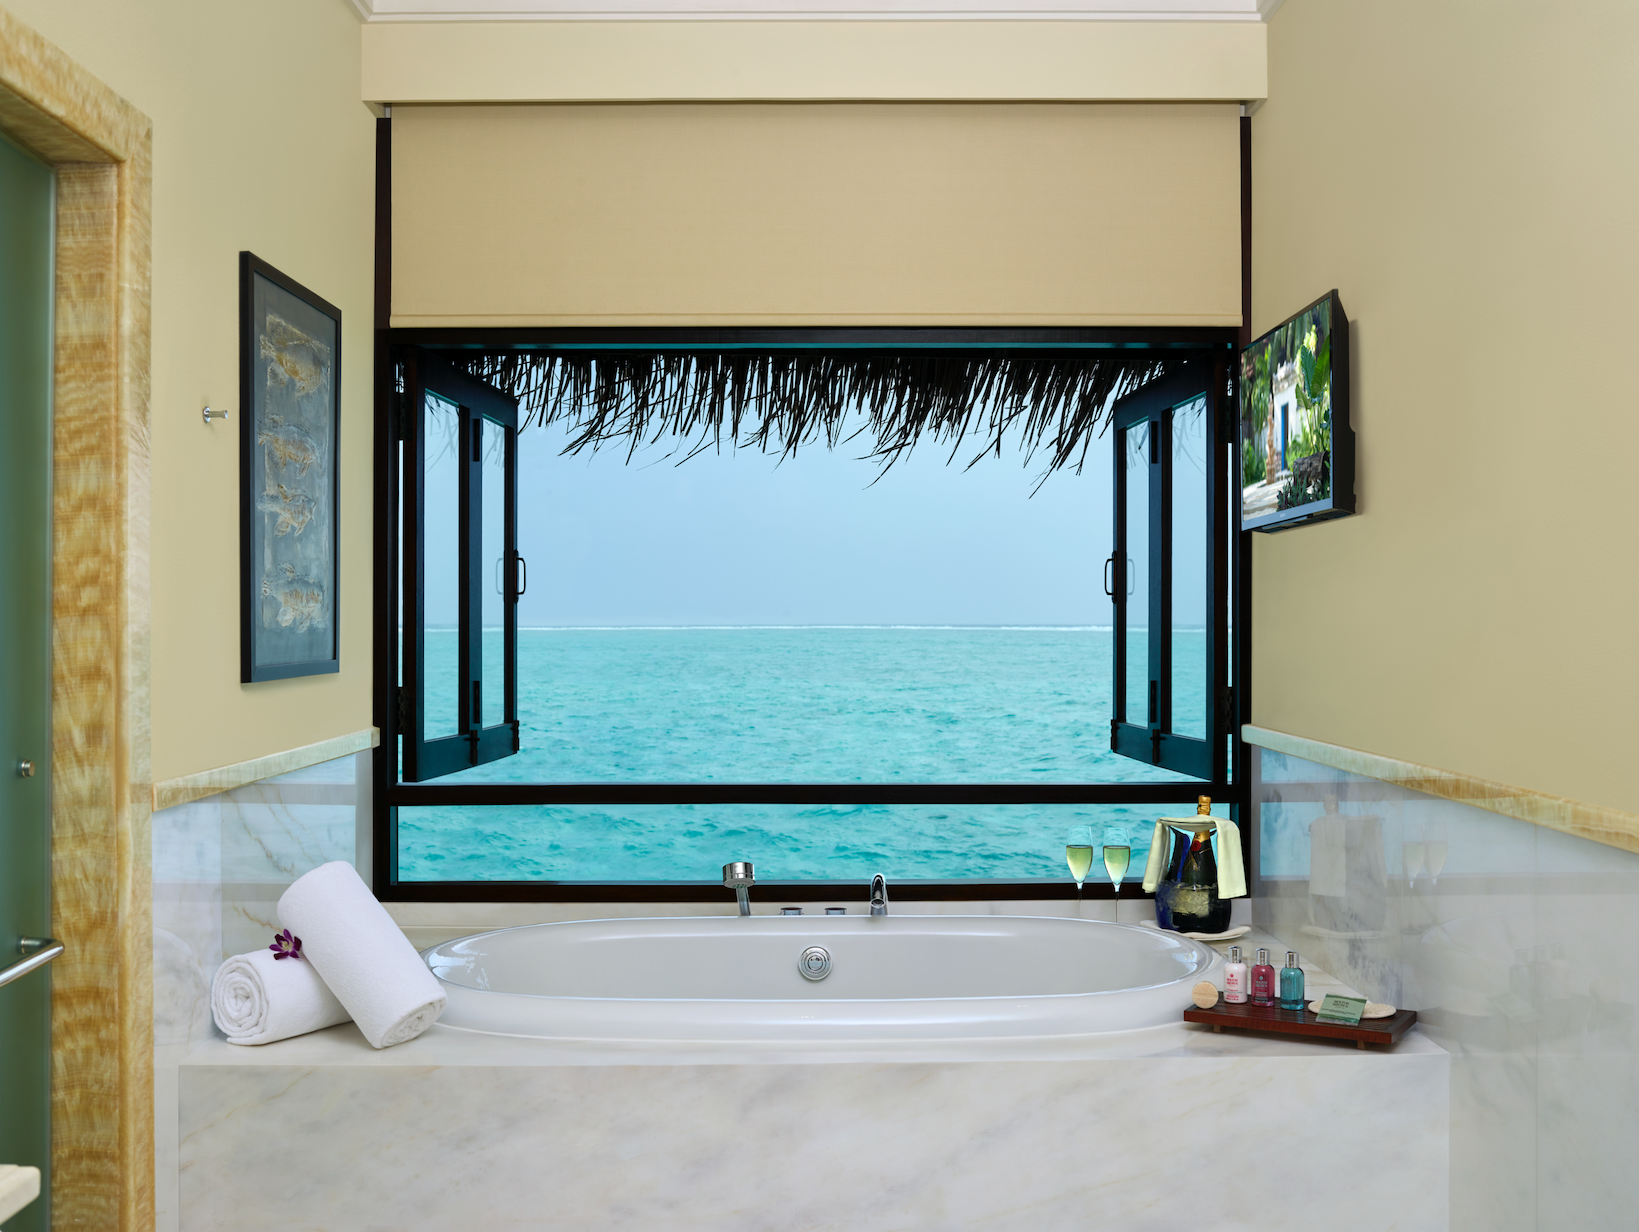   Bath with a view (photo credit: Taj Hotels)  